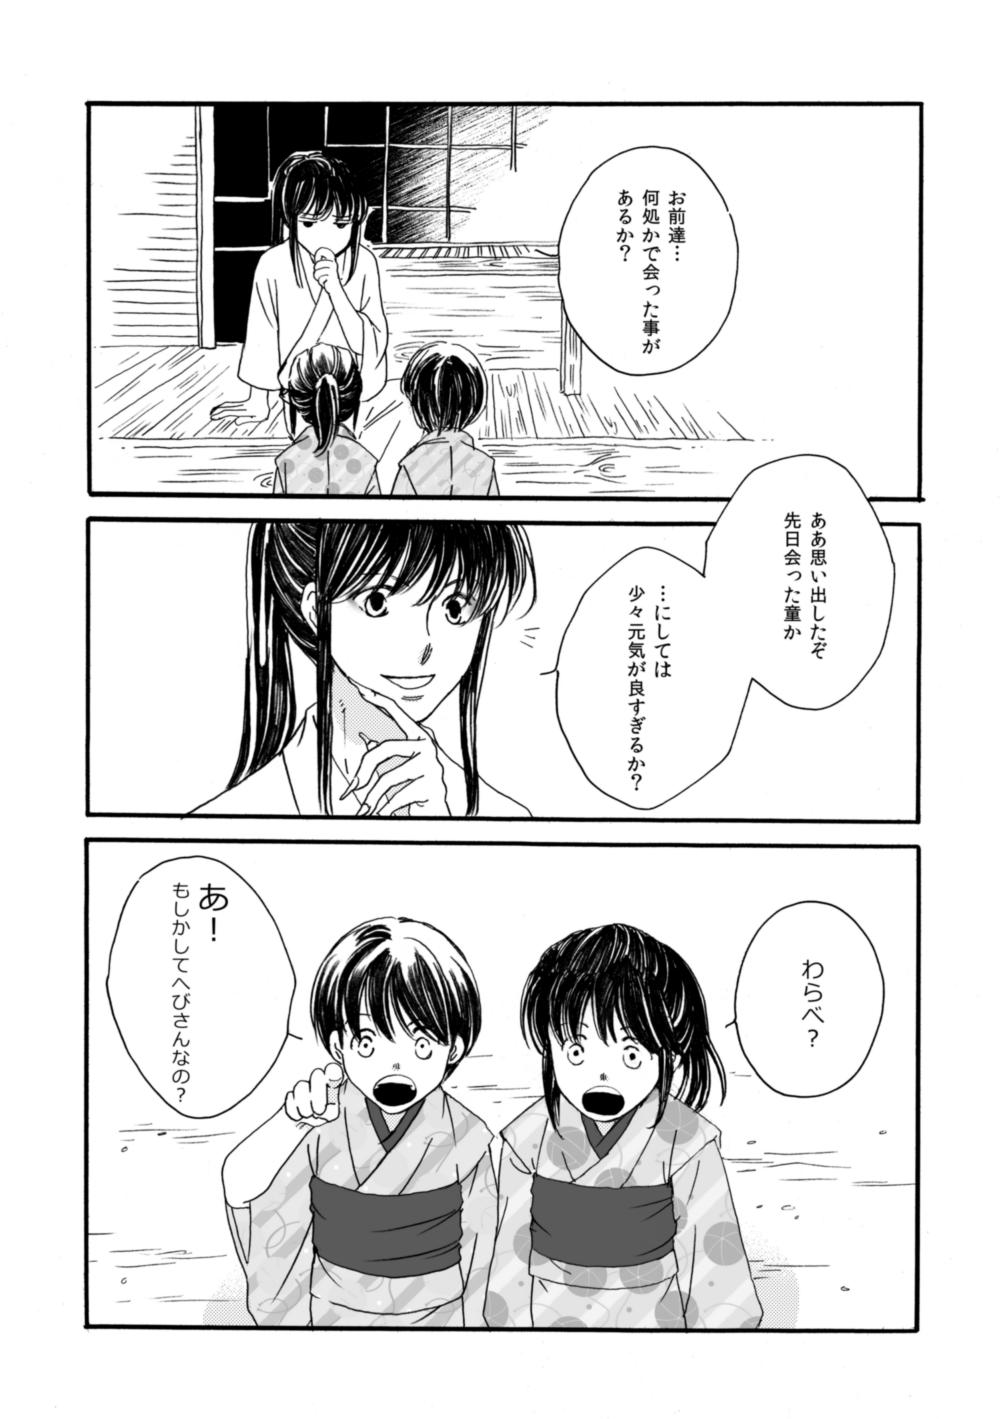 Bunduda 夜に抱かれてⅢ - Gintama Foreplay - Page 7